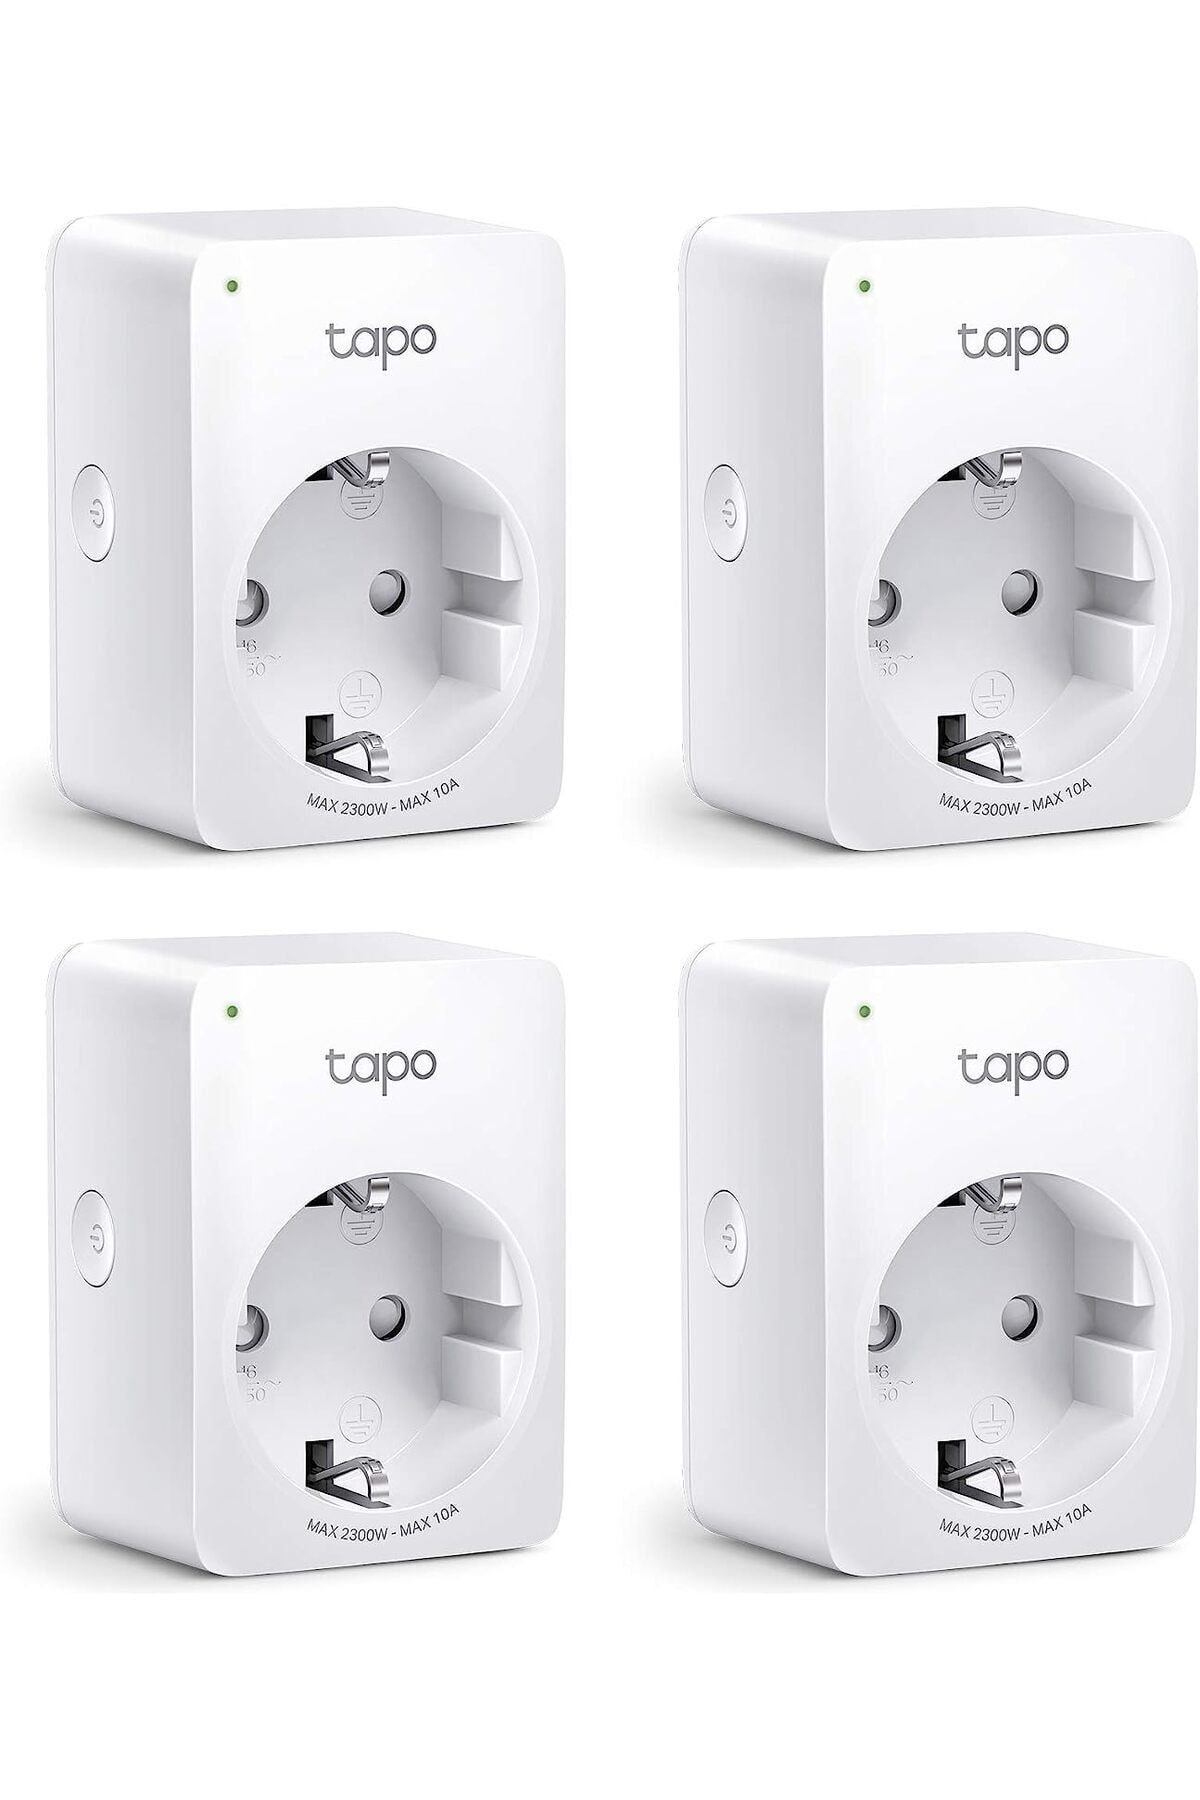 TP-Link Tapo P100(1-pack) Mini Smart Wi-Fi Socket Smart Plug